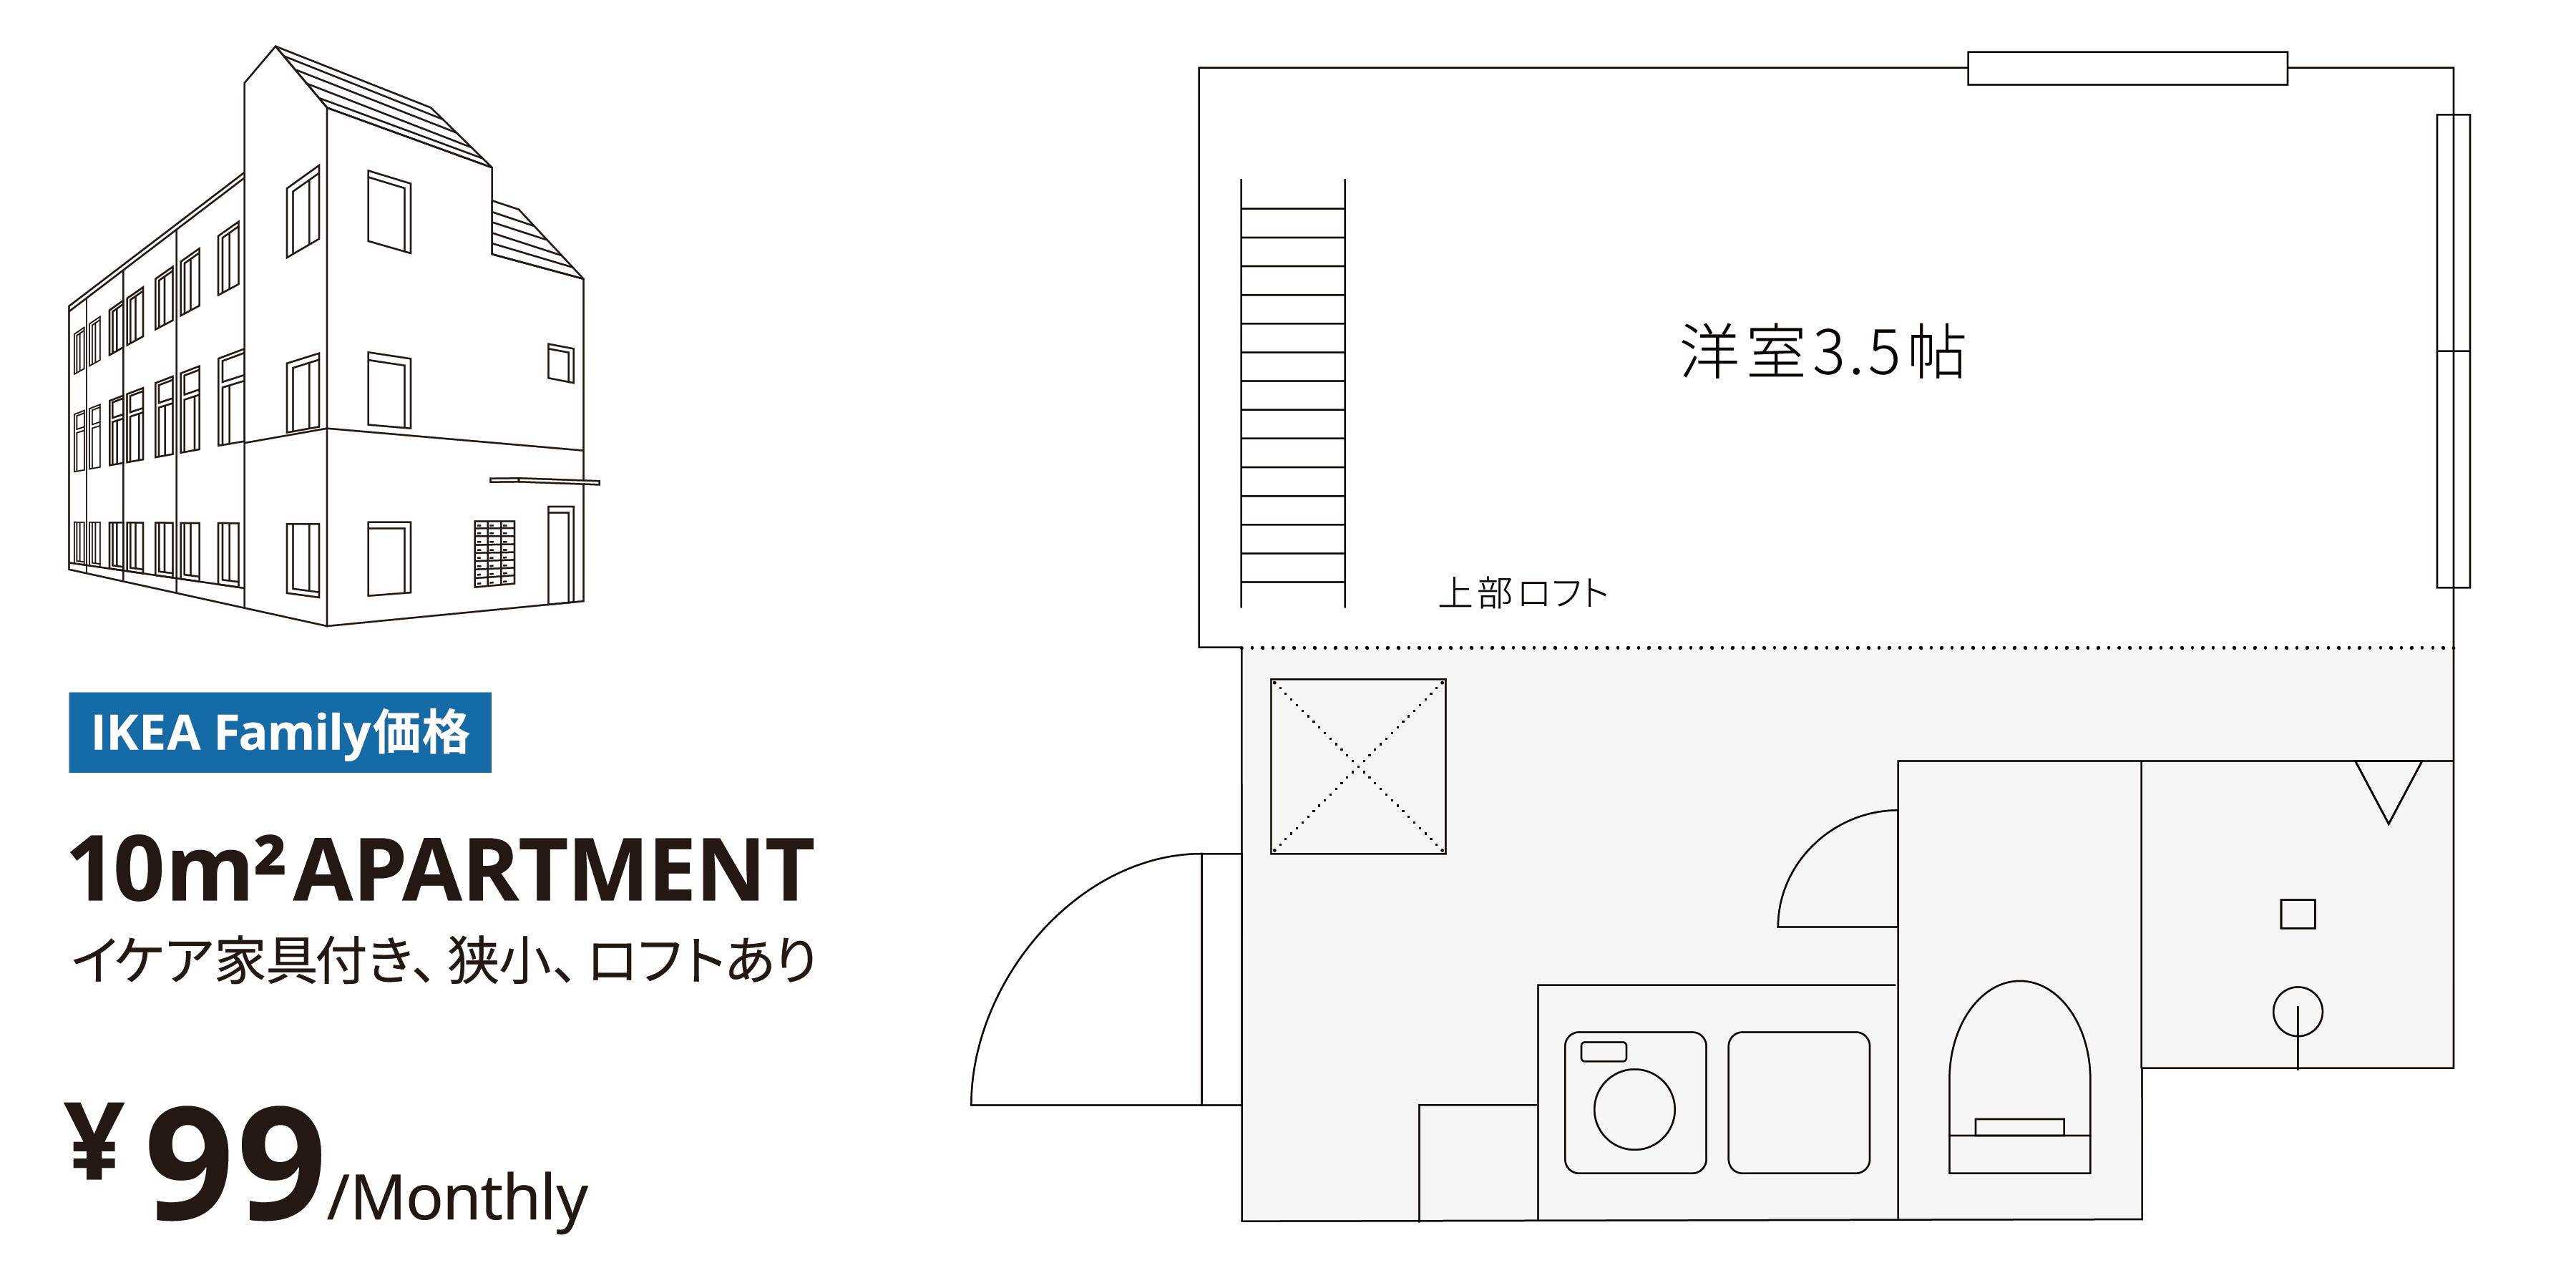 Ikea Japan winzige Wohnung